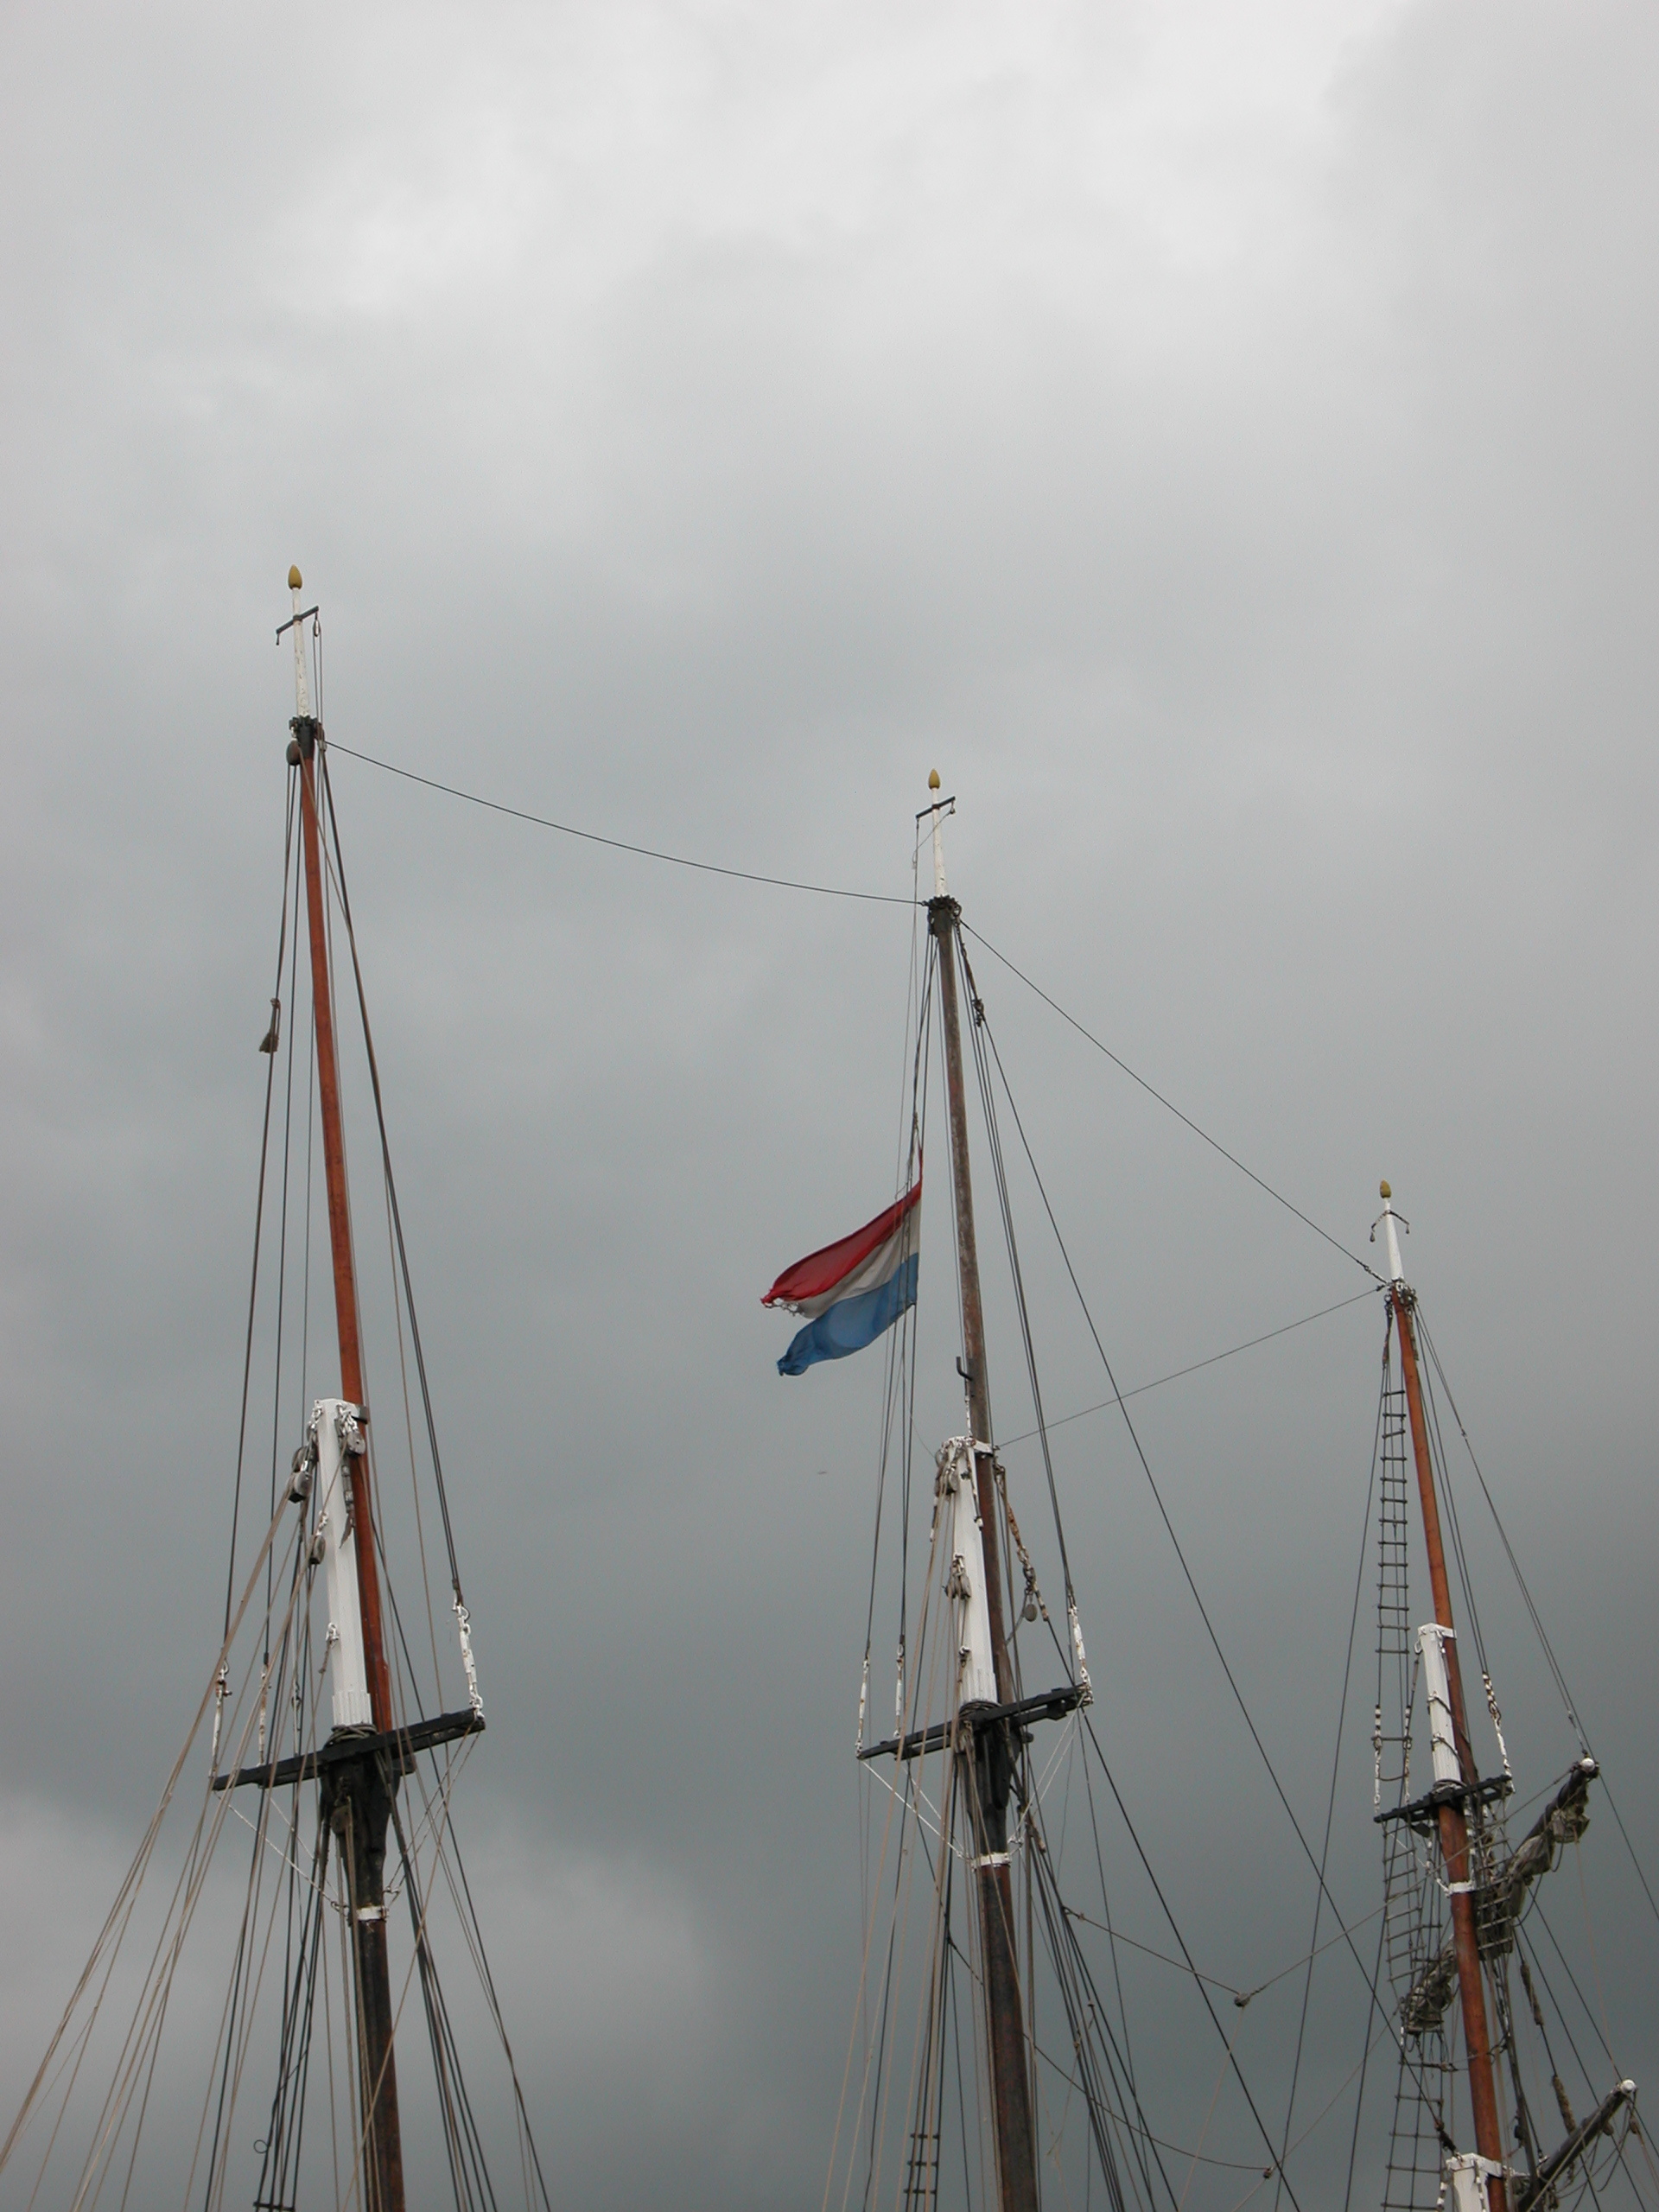 masts ships boats sky dark cloud